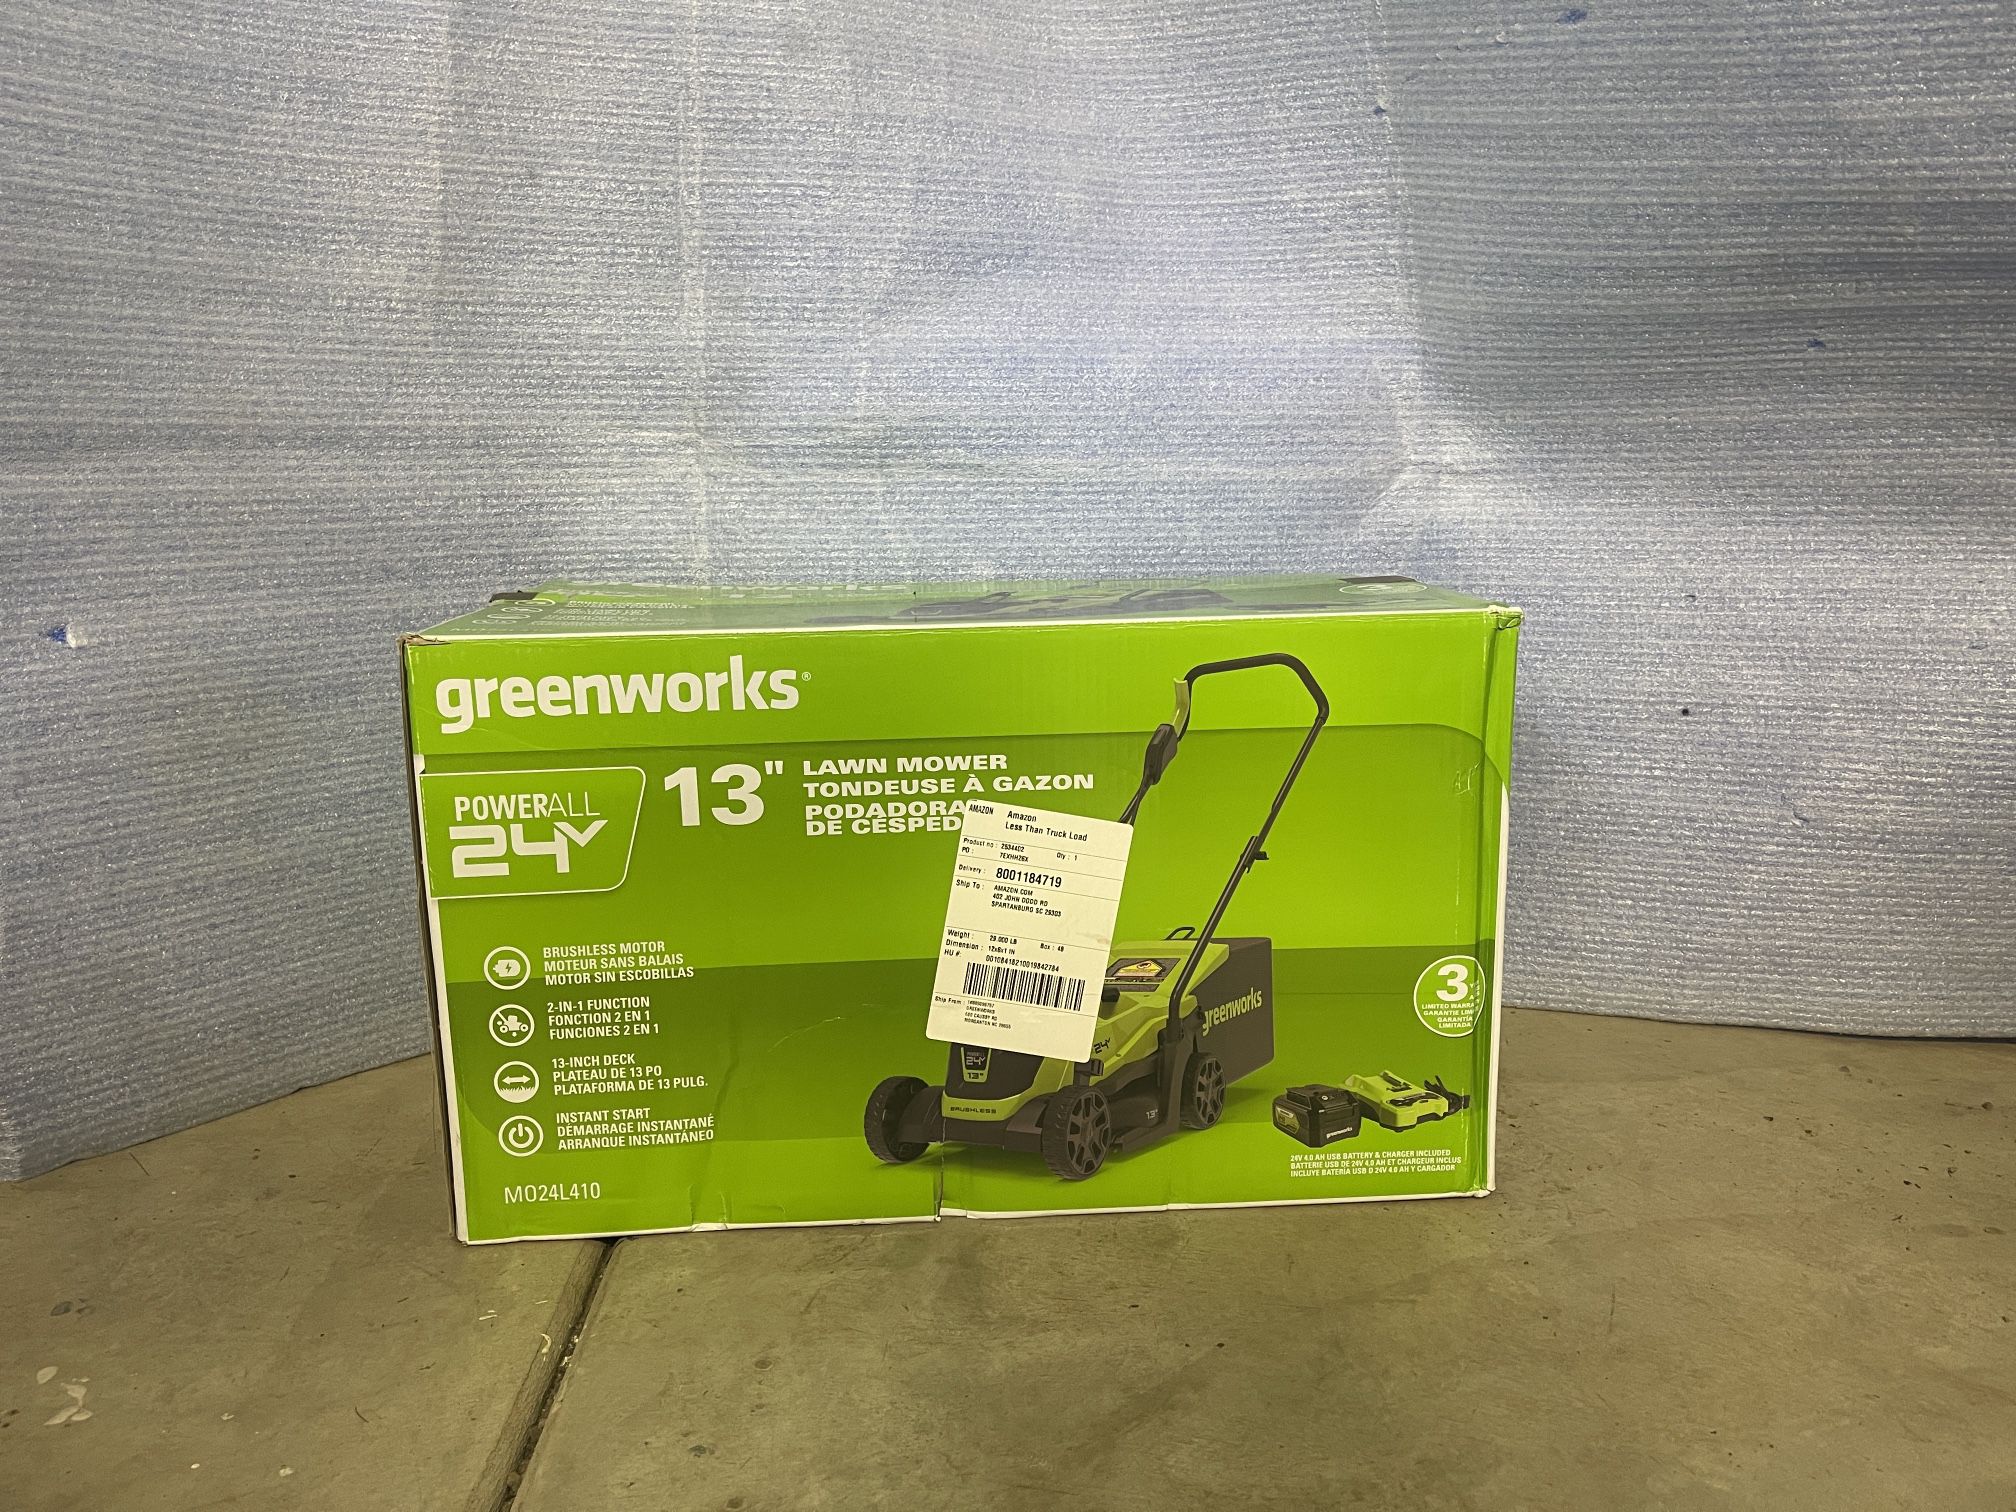 Greenworks 24v 13” Brushless Cordless Lawn Mower,4.0Ah Battery Charger